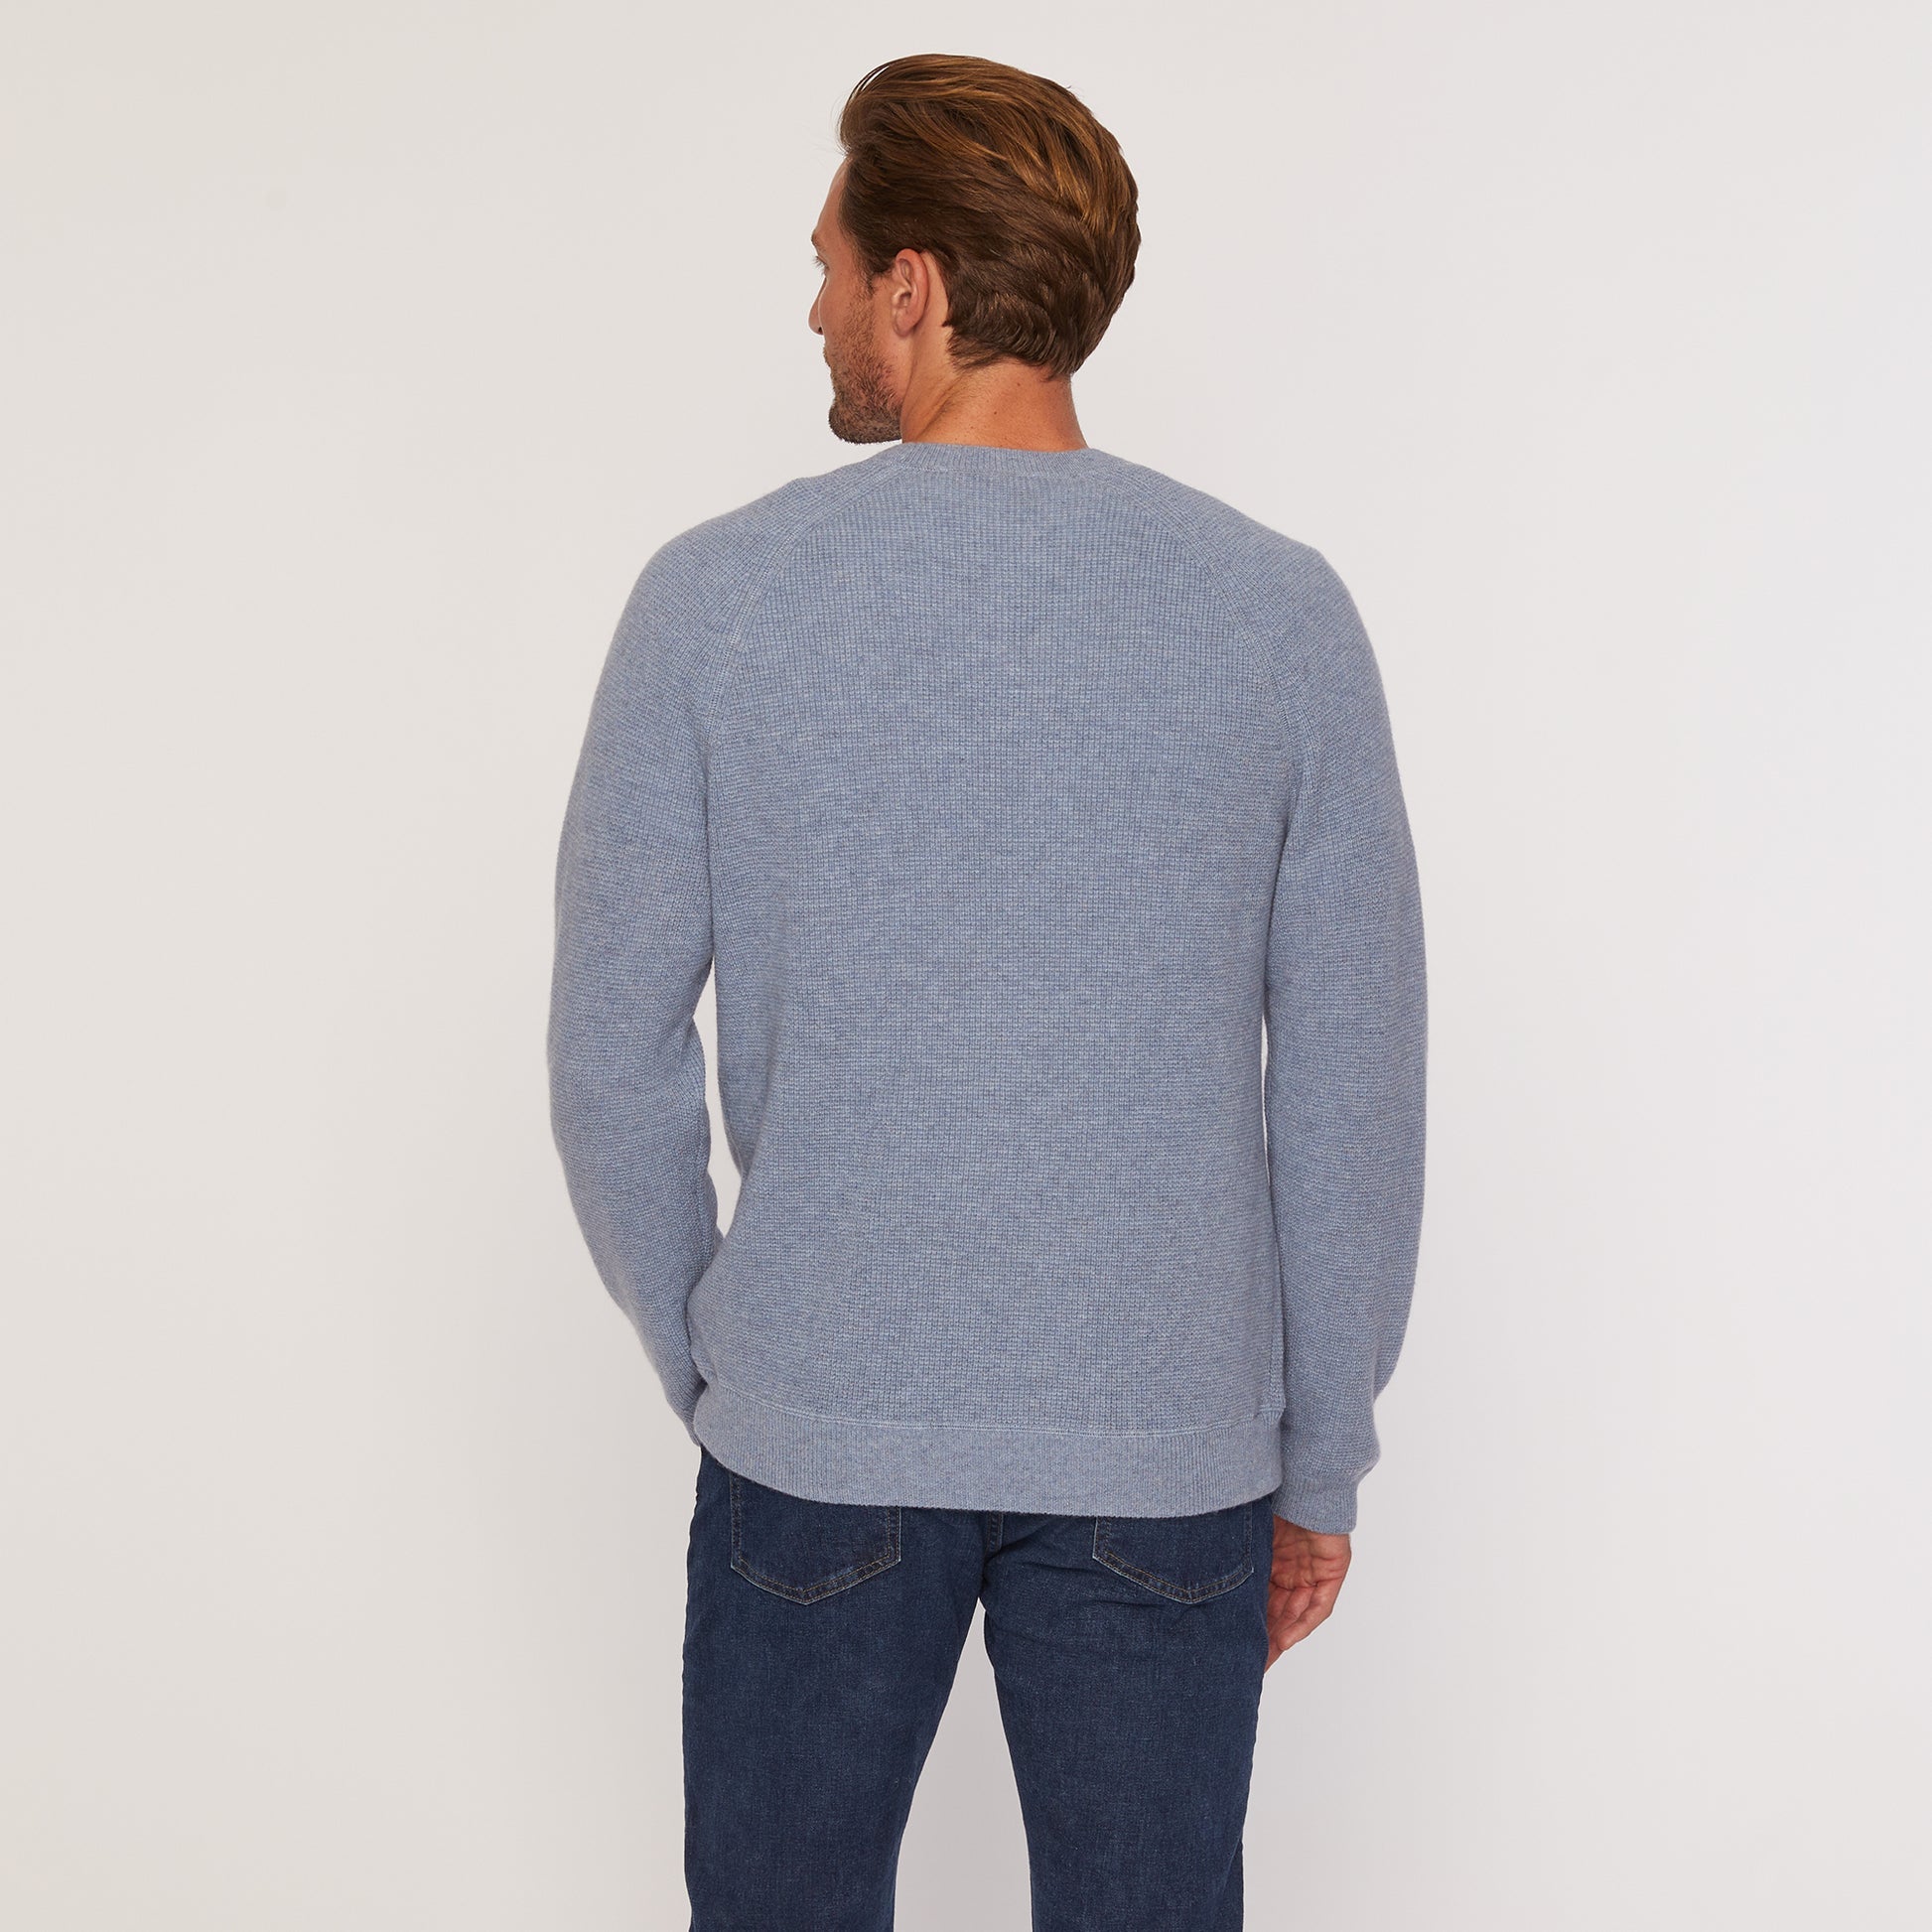 Cashmere Project Men's Thermal Sweatshirt